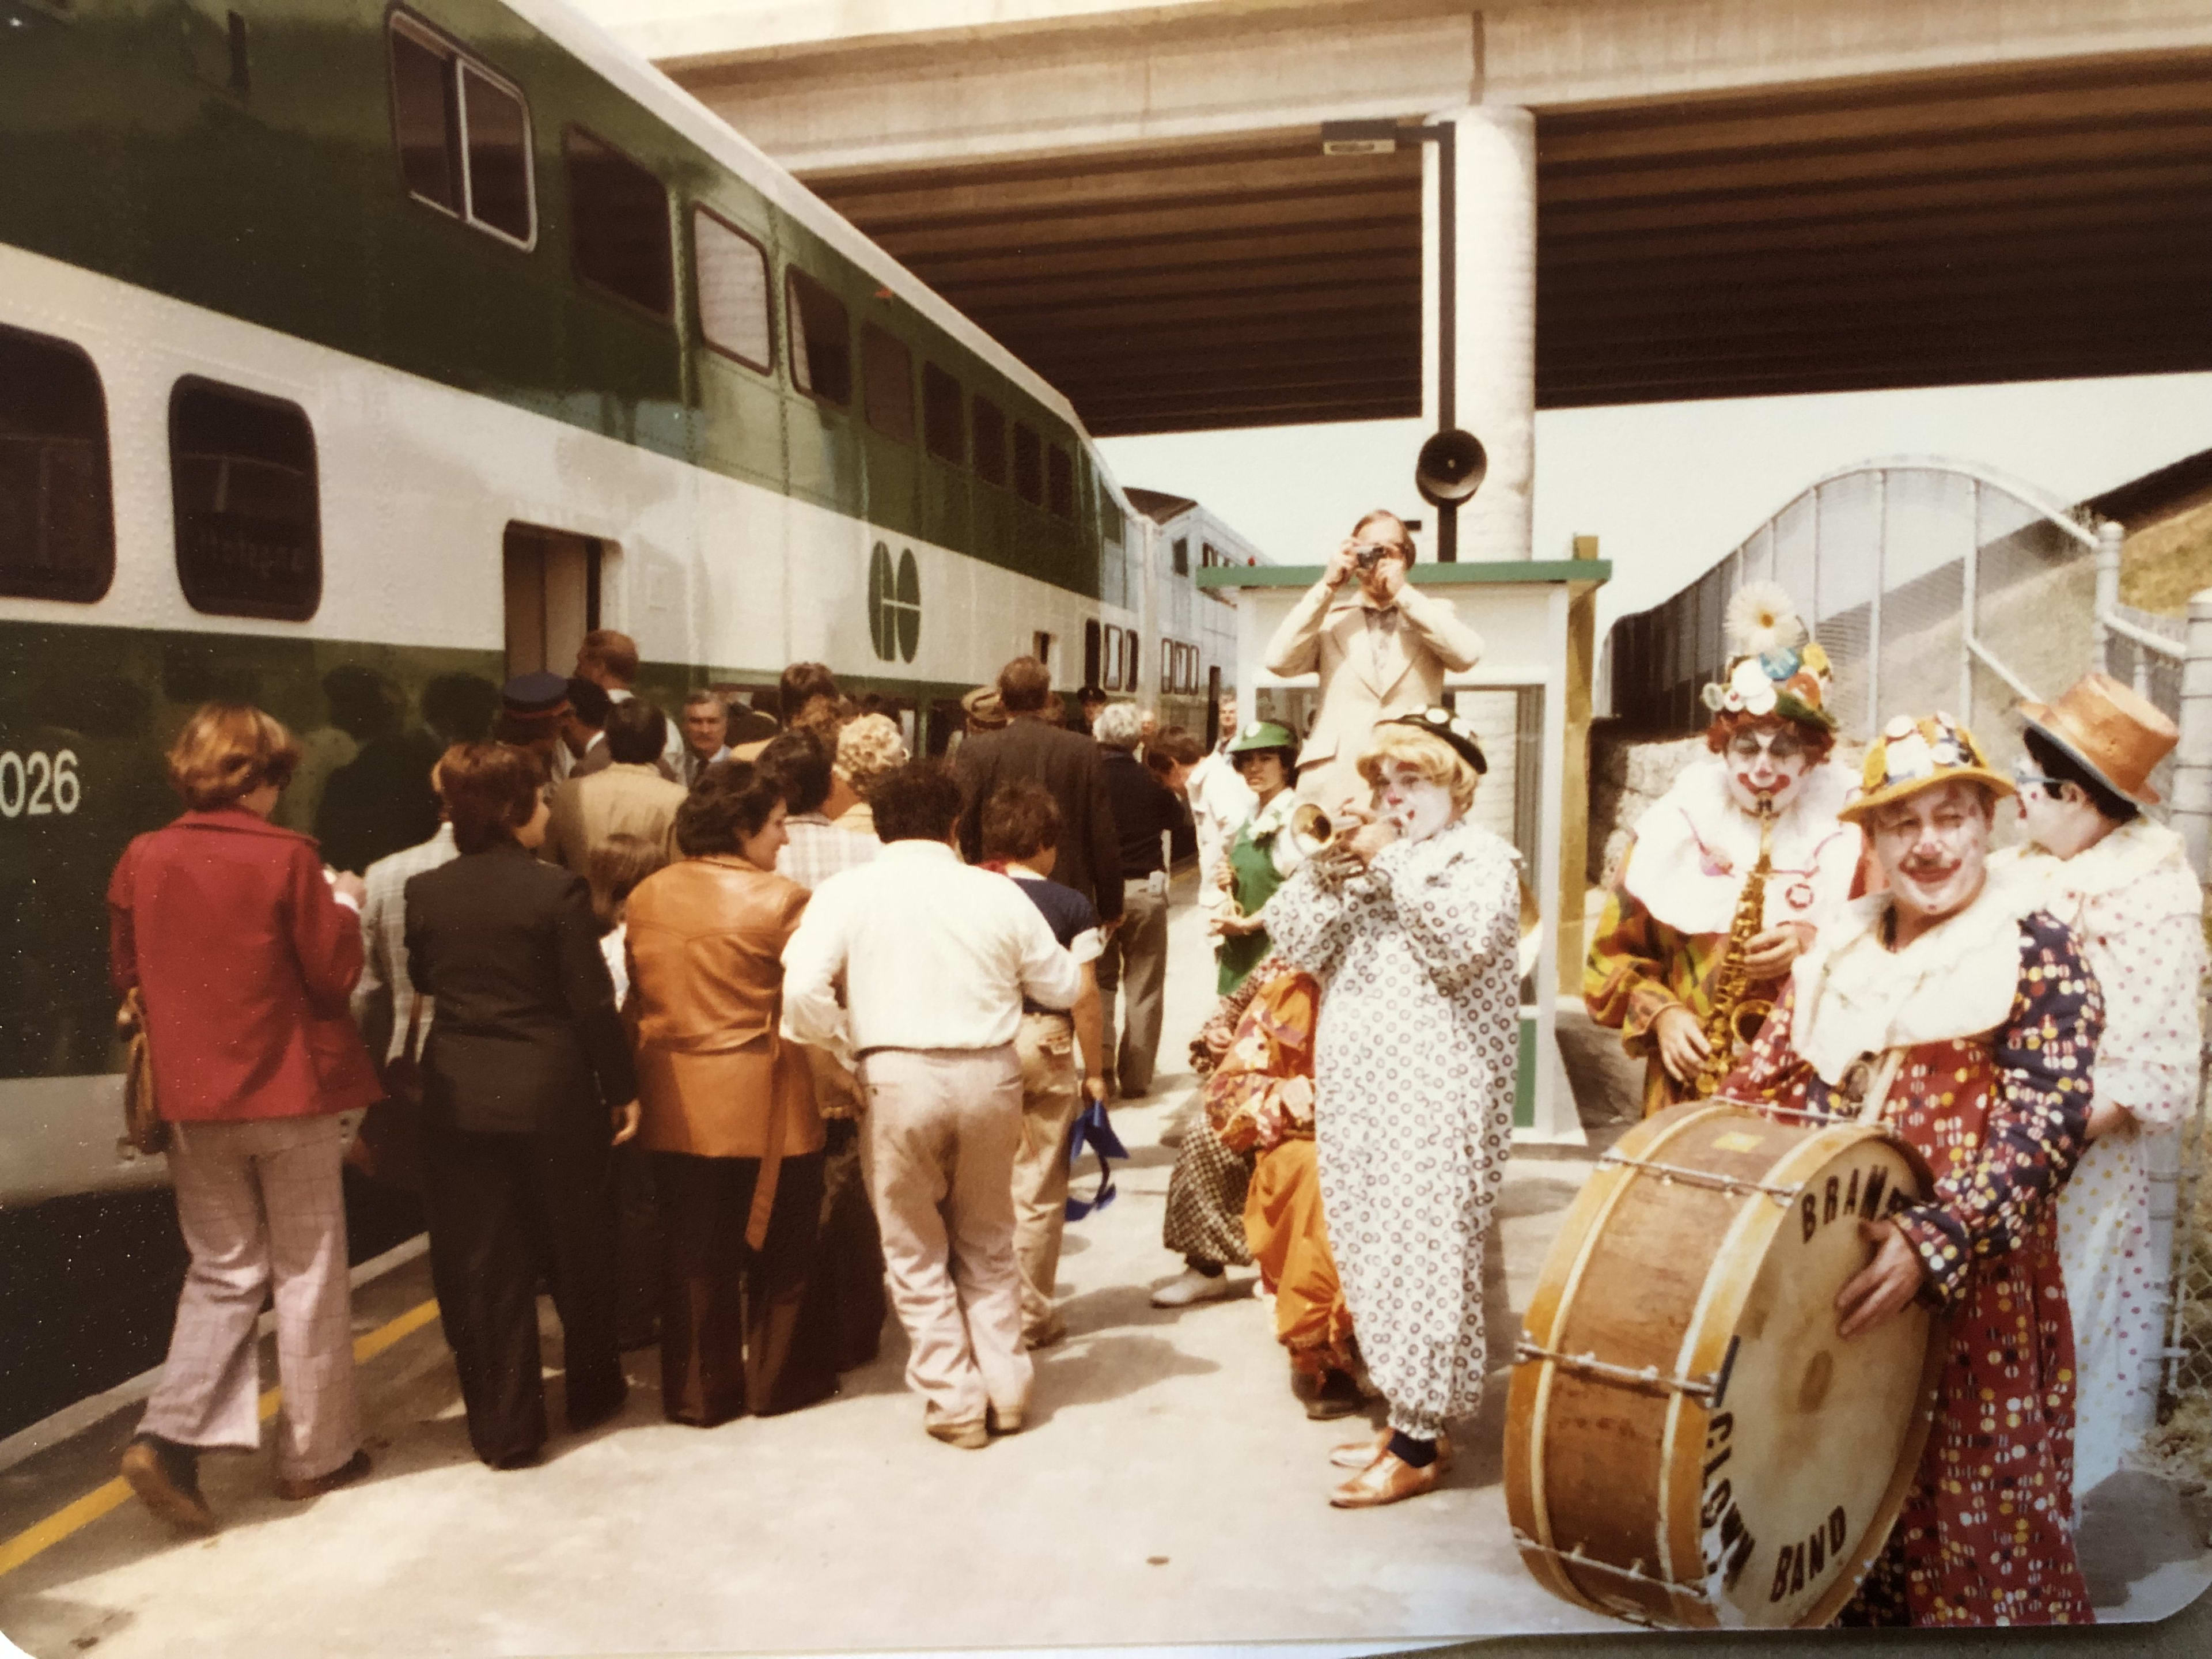 A clown band plays as customers board a GO train.